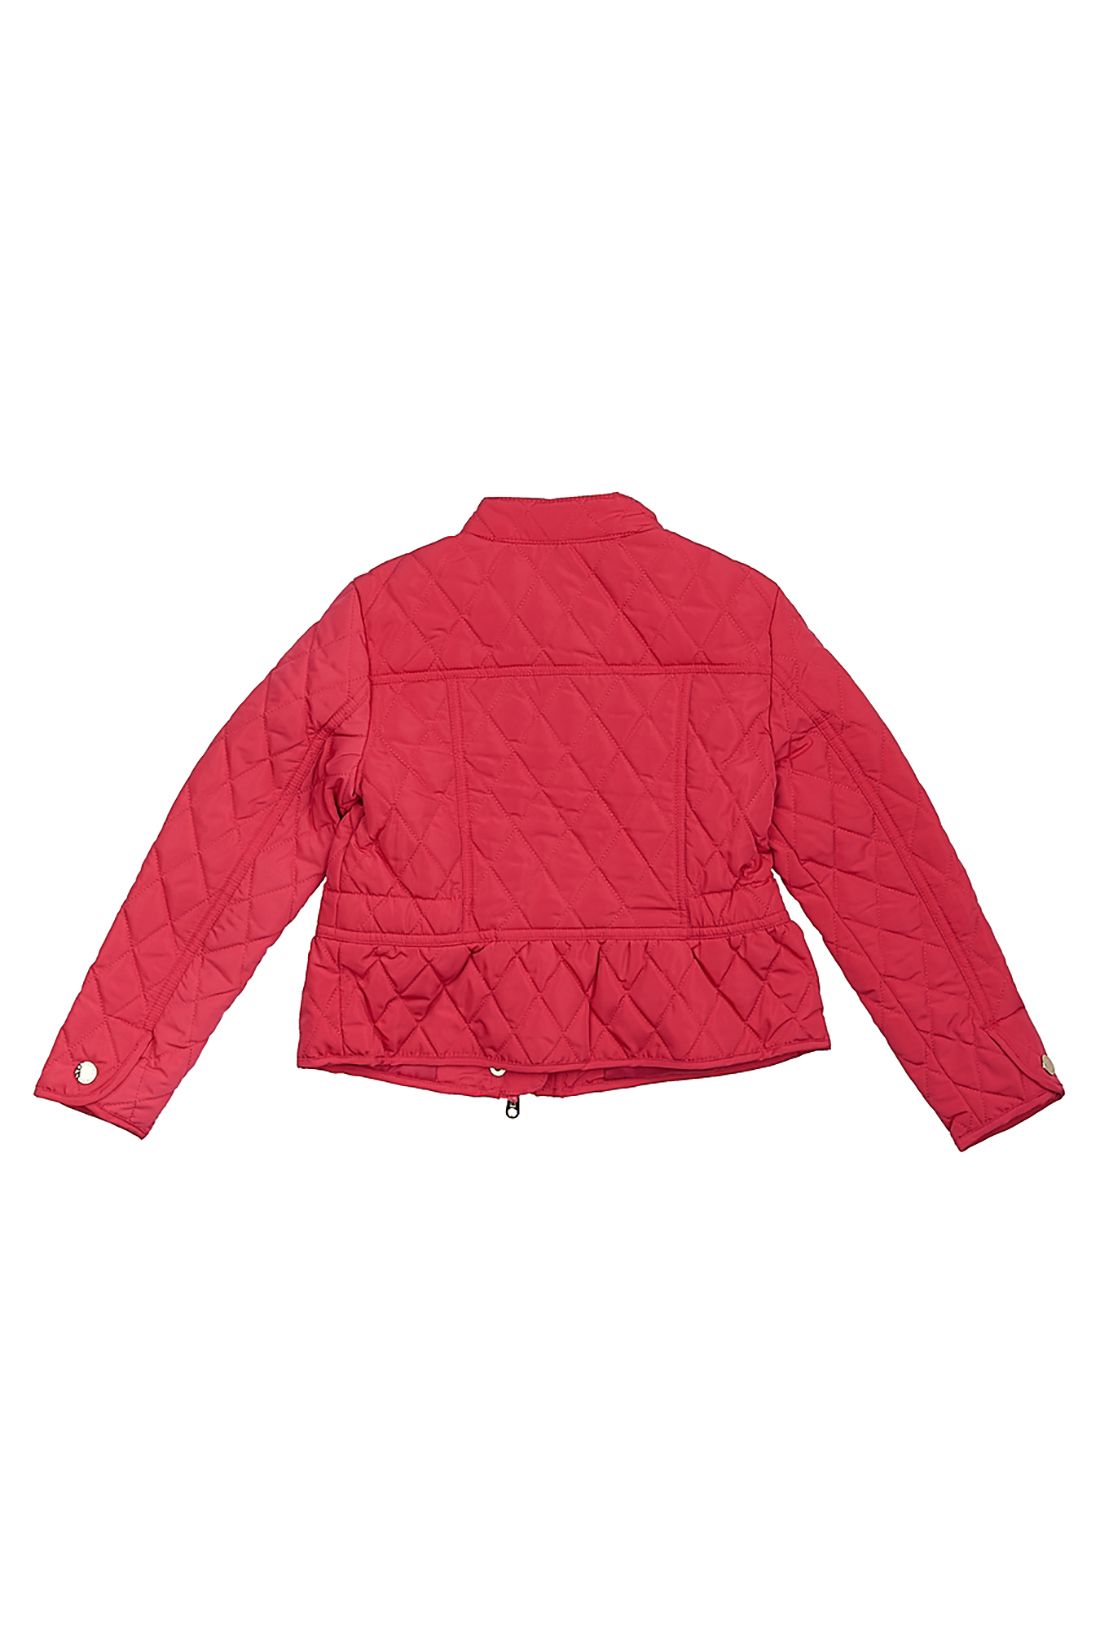 Куртка для девочки (арт. baon BK038004), размер 122-128, цвет розовый Куртка для девочки (арт. baon BK038004) - фото 4